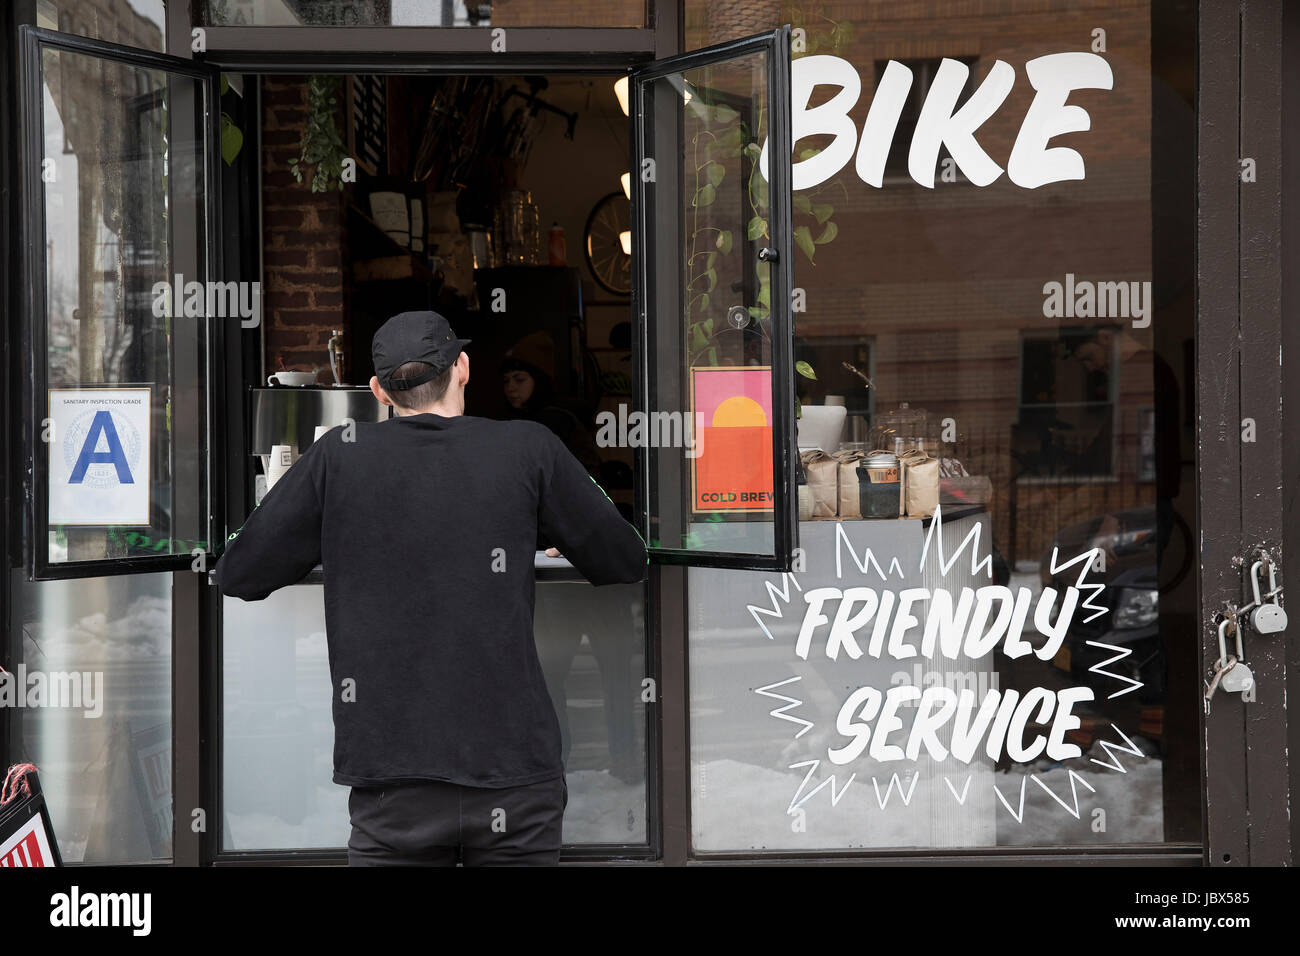 Customer at service window, Nike and Coffee shop, New York, USA Stock Photo